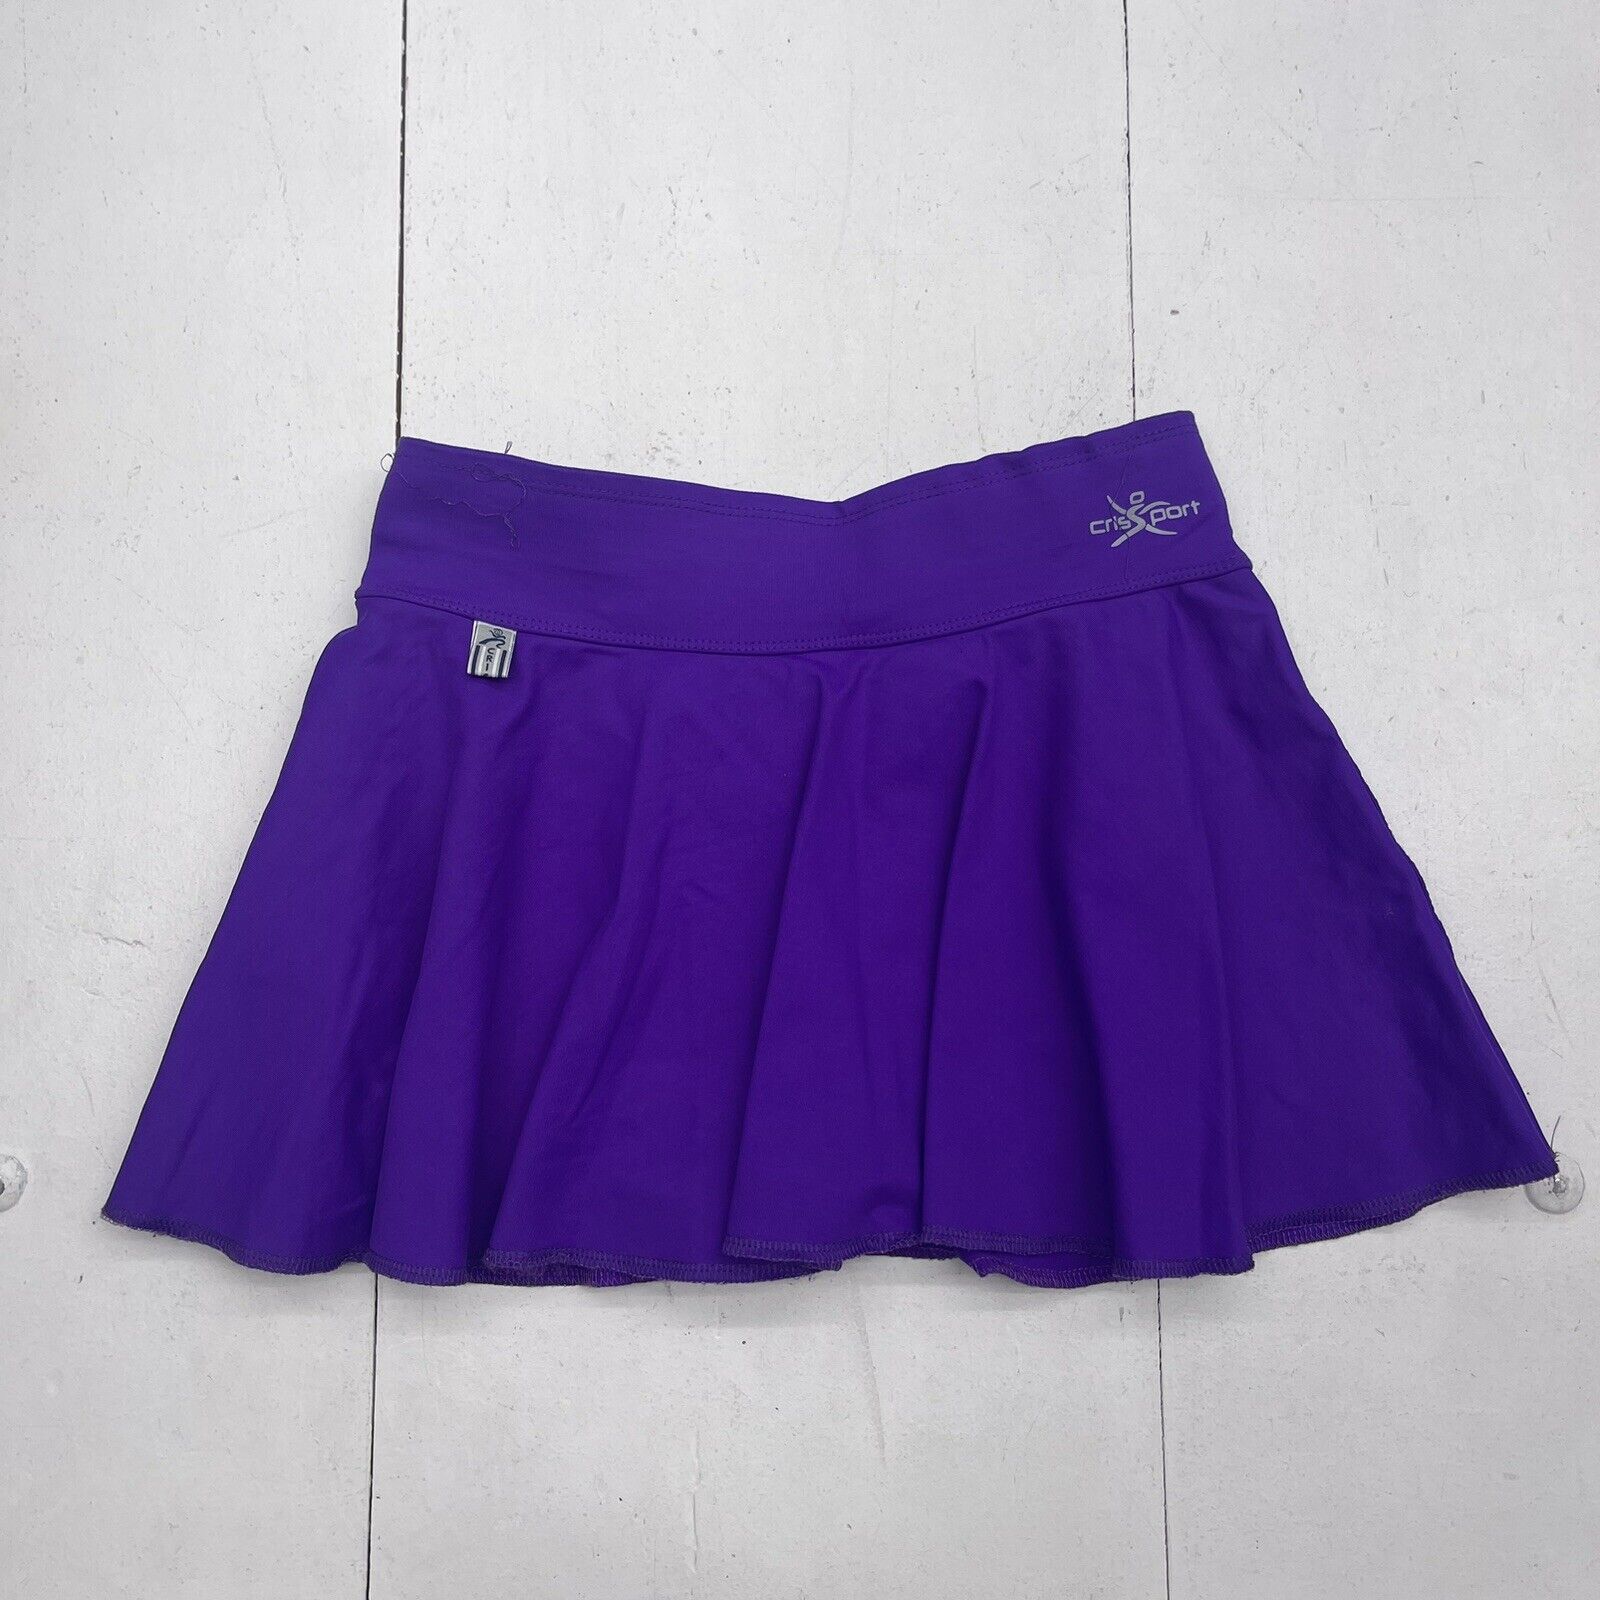 Cris Sport Purple Pleated Athletic Skirt Women’s Size Medium